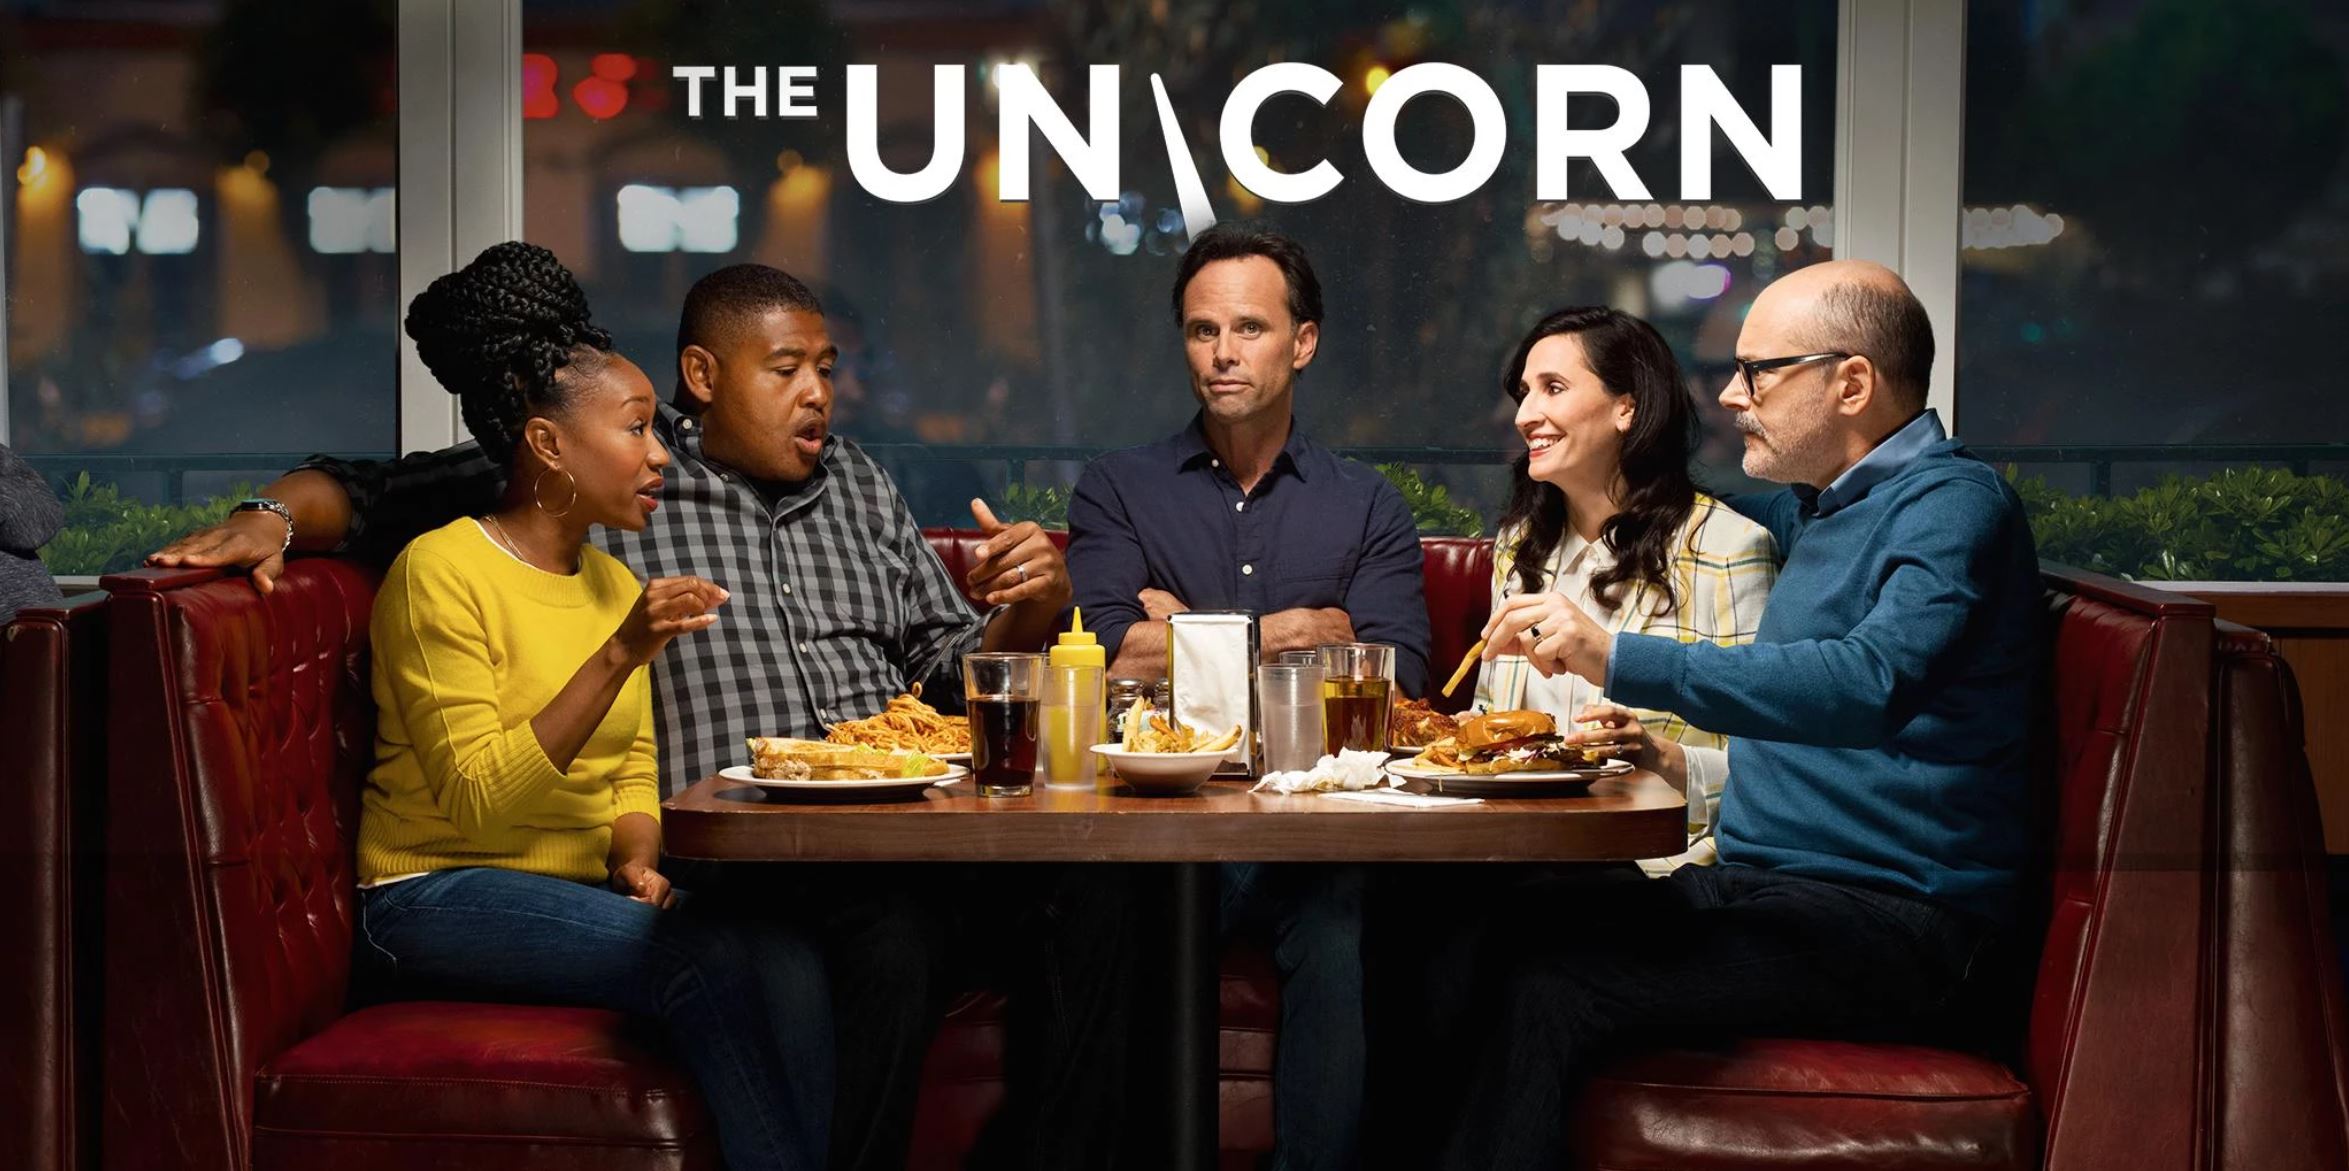 CBS original television series The Unicorn